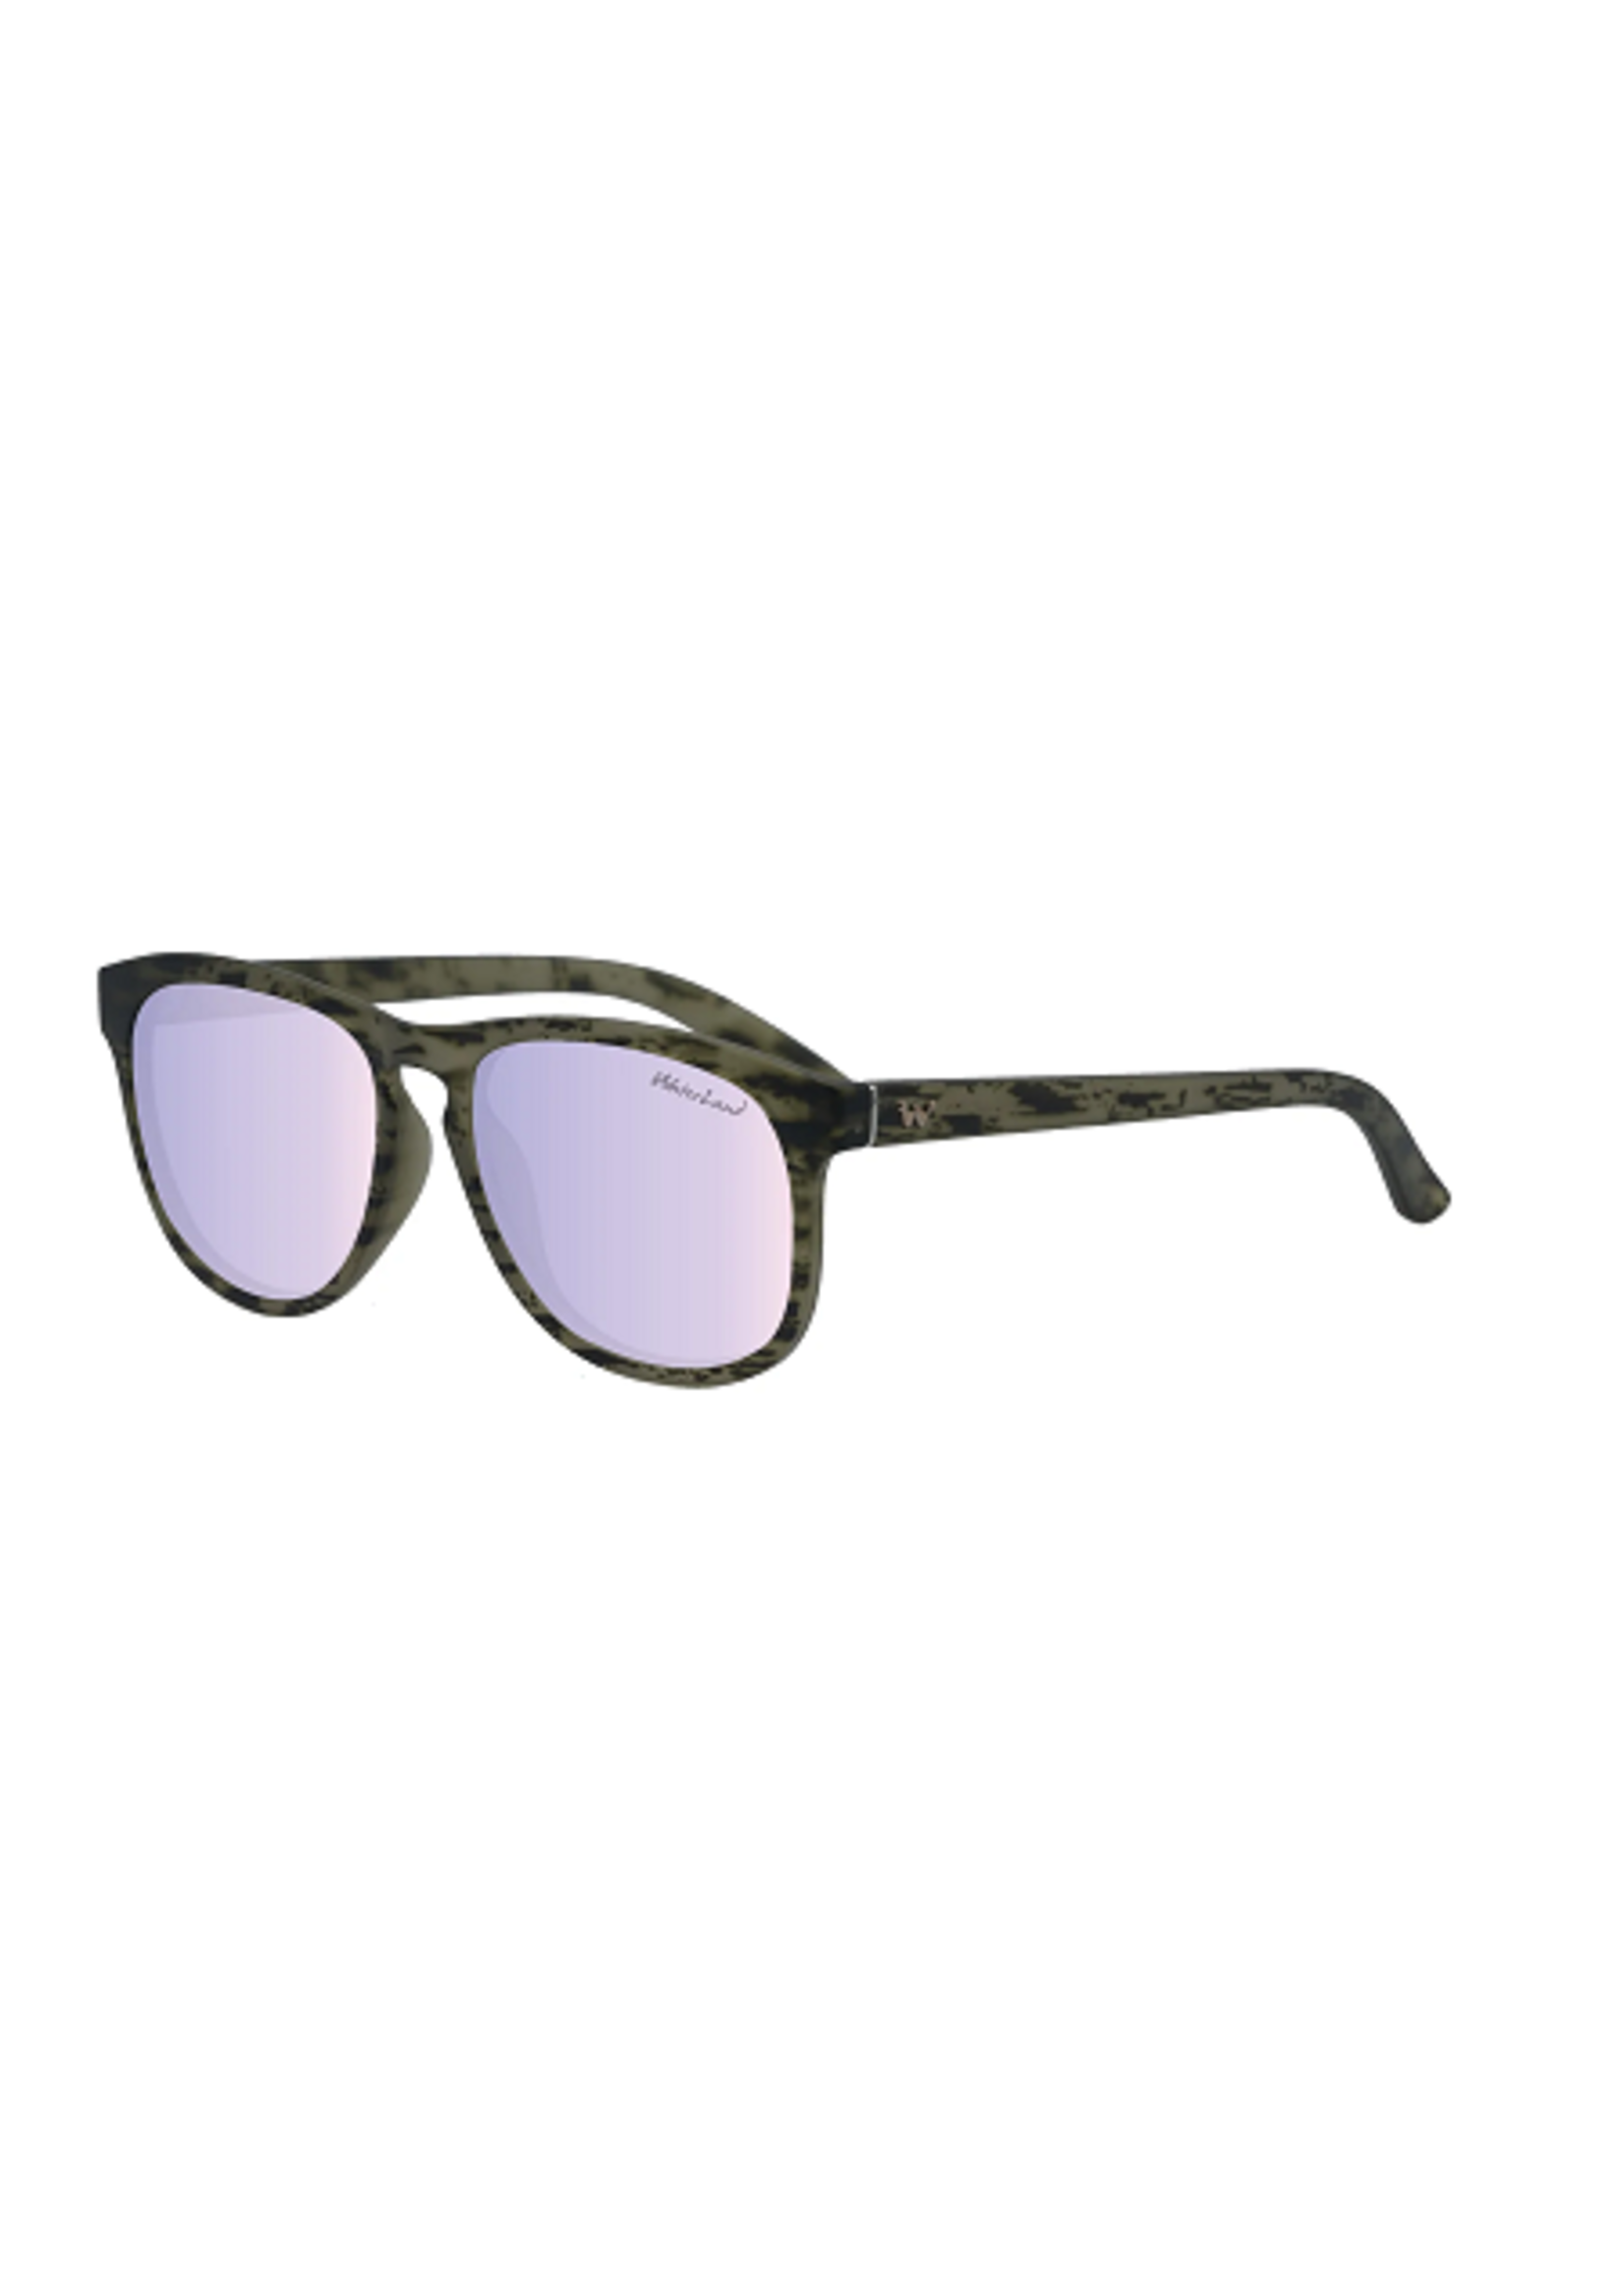 Waterland Ladi Sunglasses Blackwater/Lavender Mirror